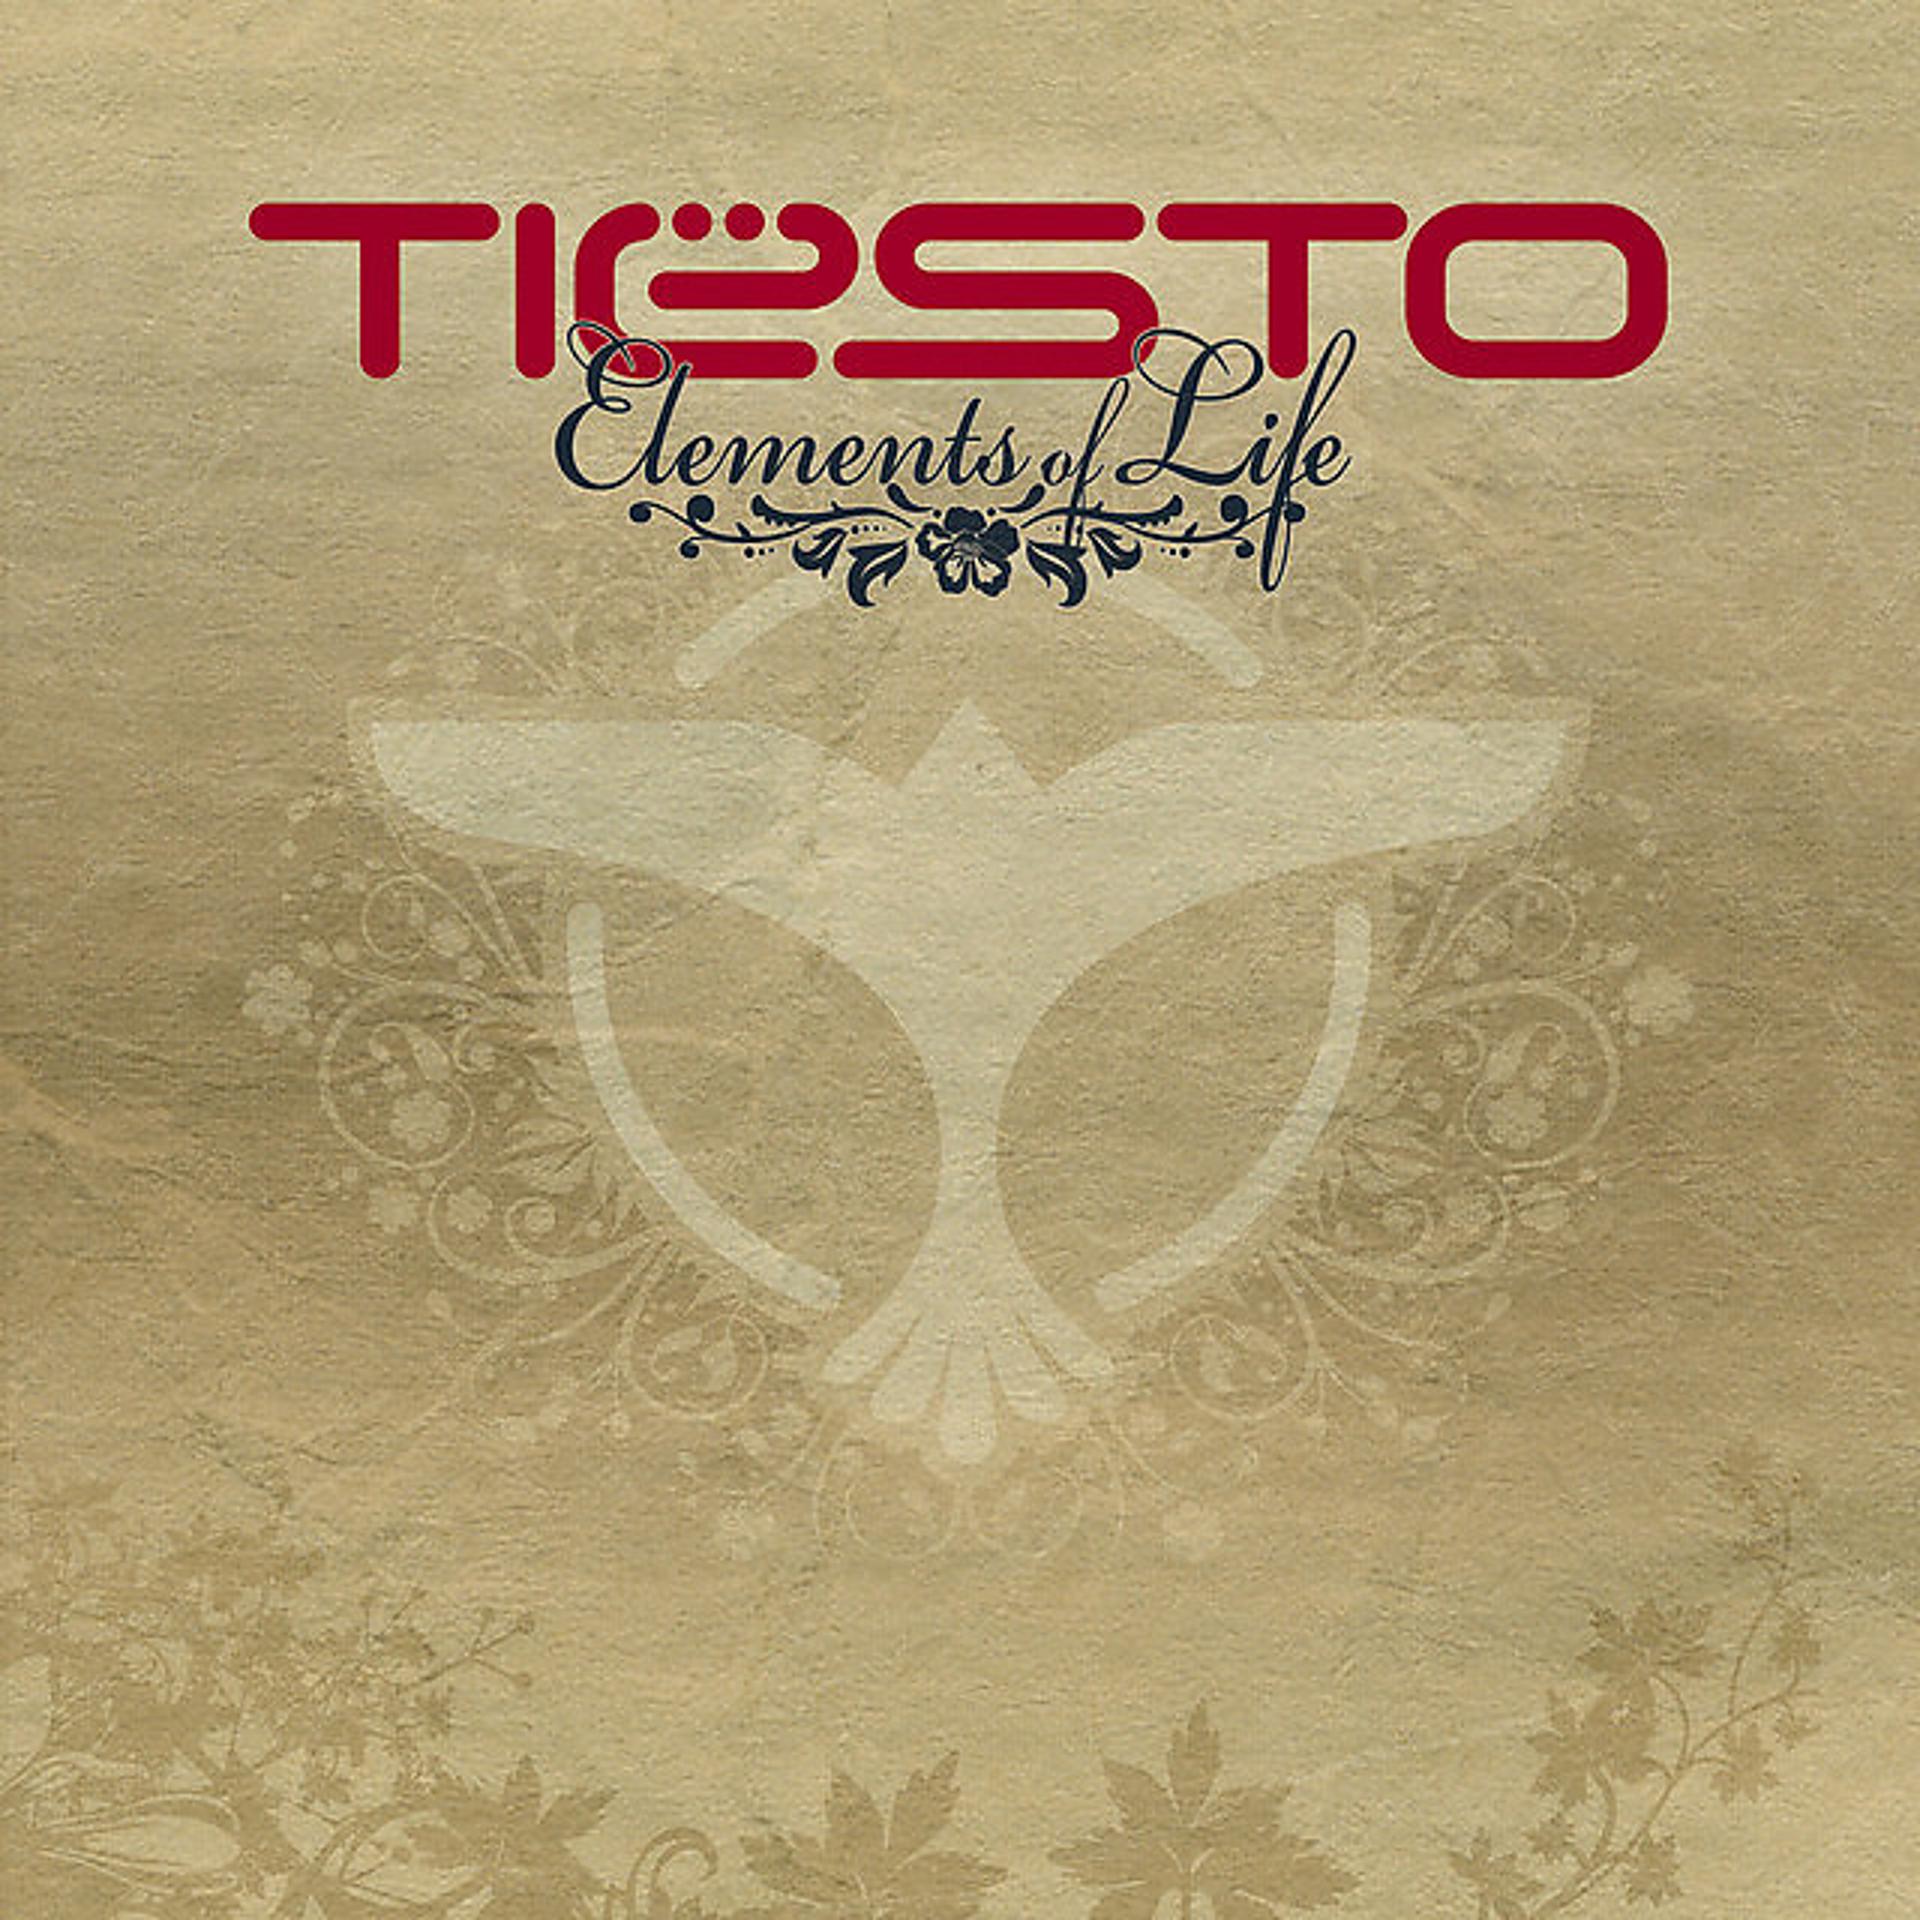 Dance 4 life. Tiesto альбом element. DJ Tiesto альбомы. DJ Tiesto elements of Life. Tiësto - elements of Life (2007).